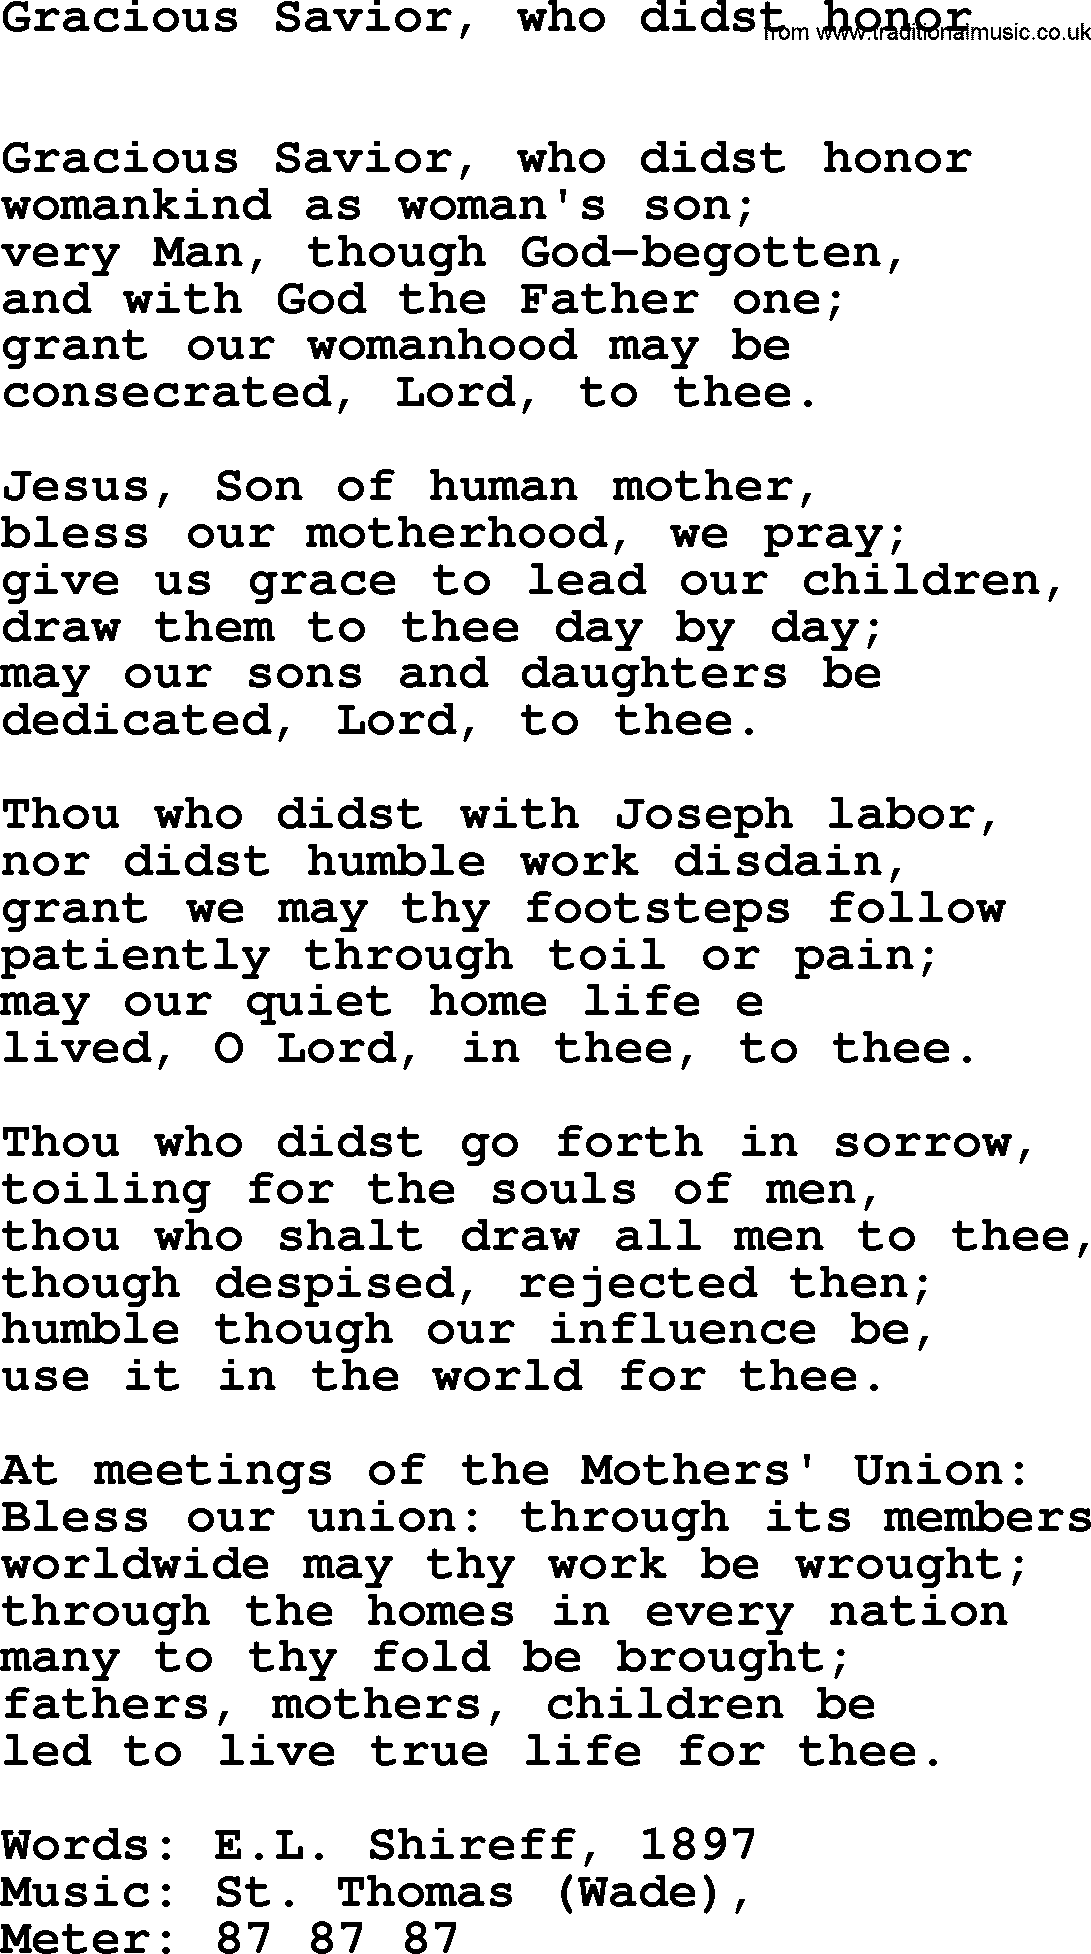 Book of Common Praise Hymn: Gracious Savior, Who Didst Honor.txt lyrics with midi music